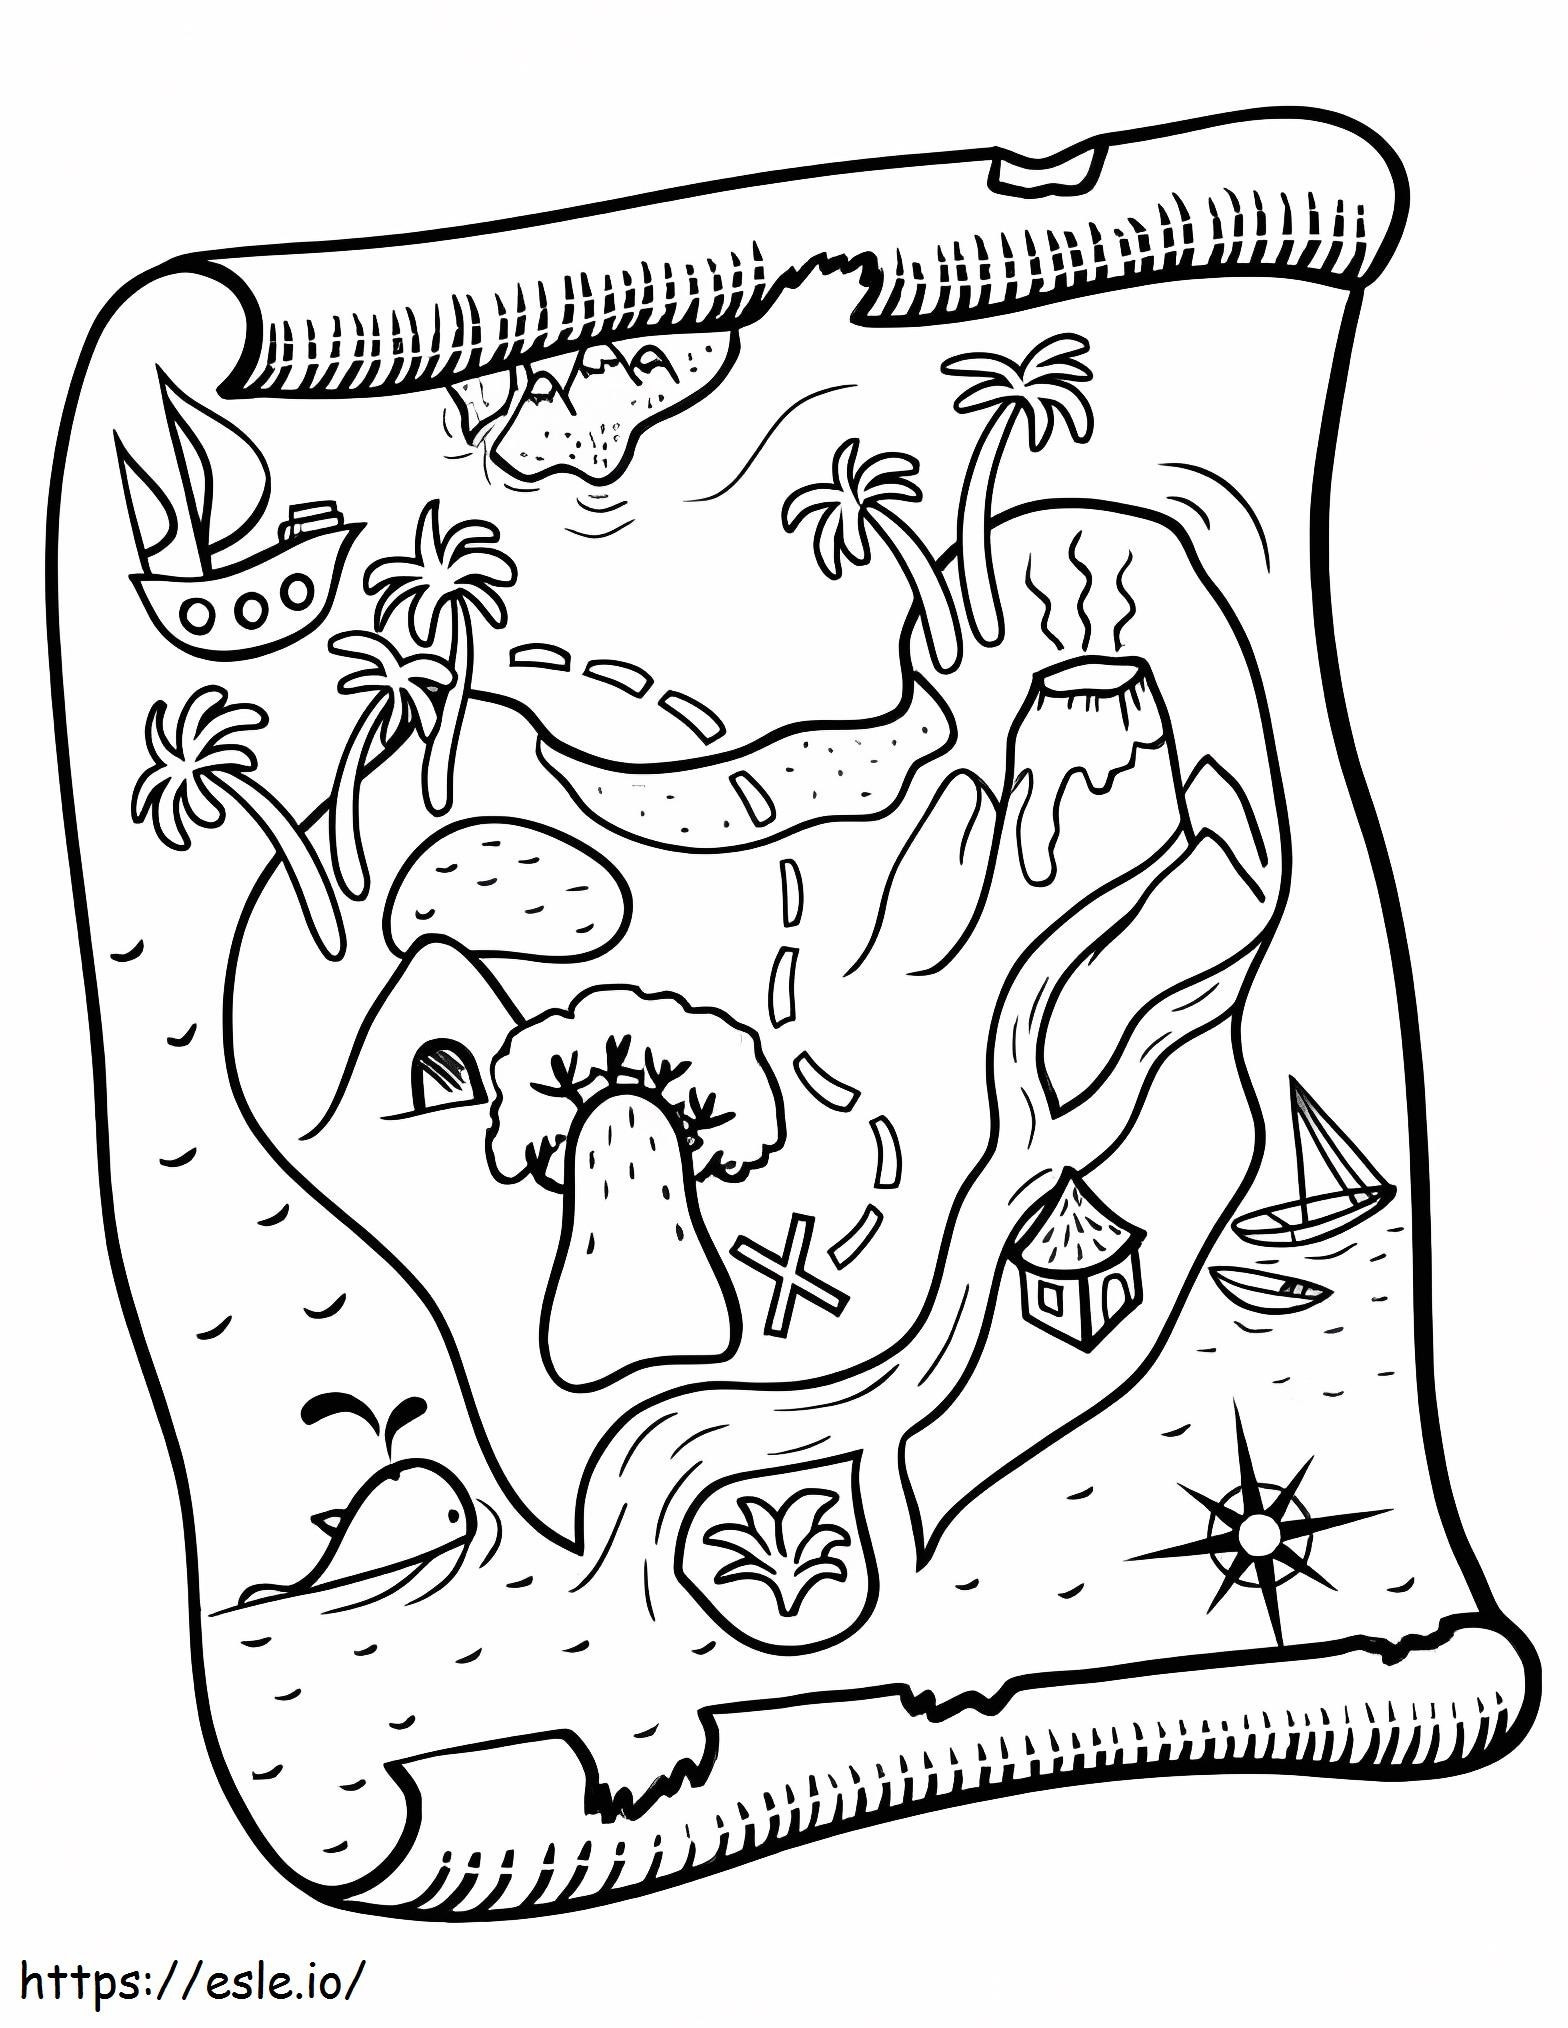 Treasure Map 10 coloring page